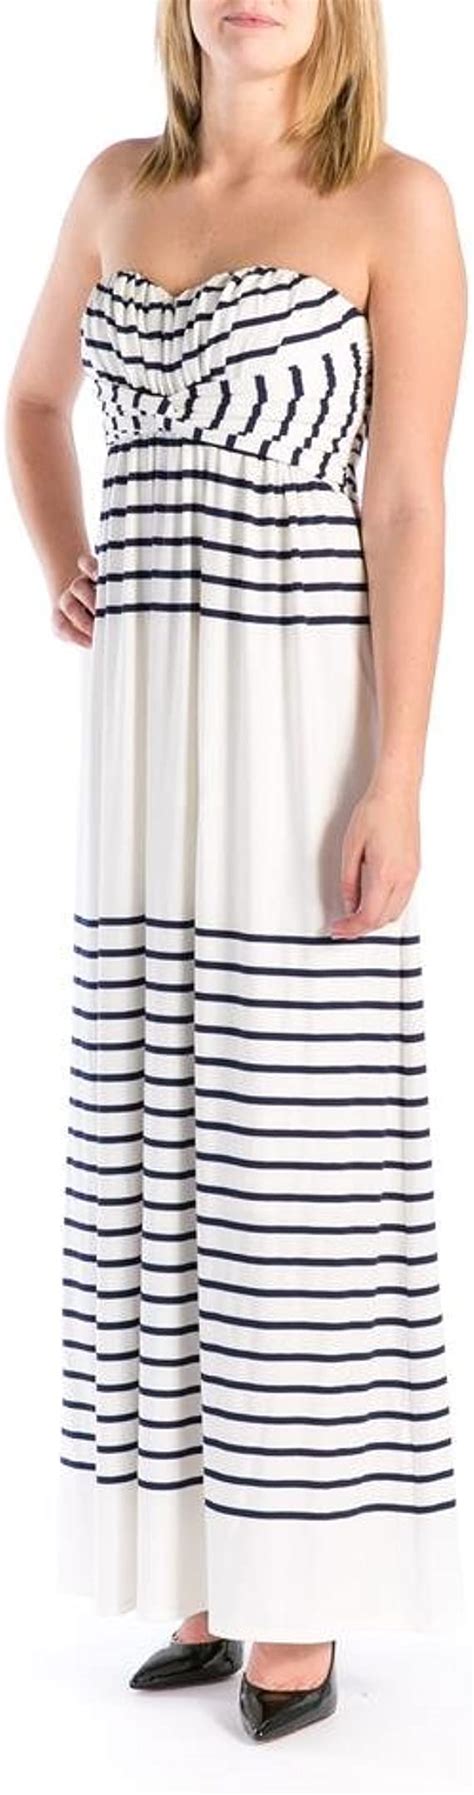 Jessica Simpson Strapless Striped Maxi Dress Navy White 10 At